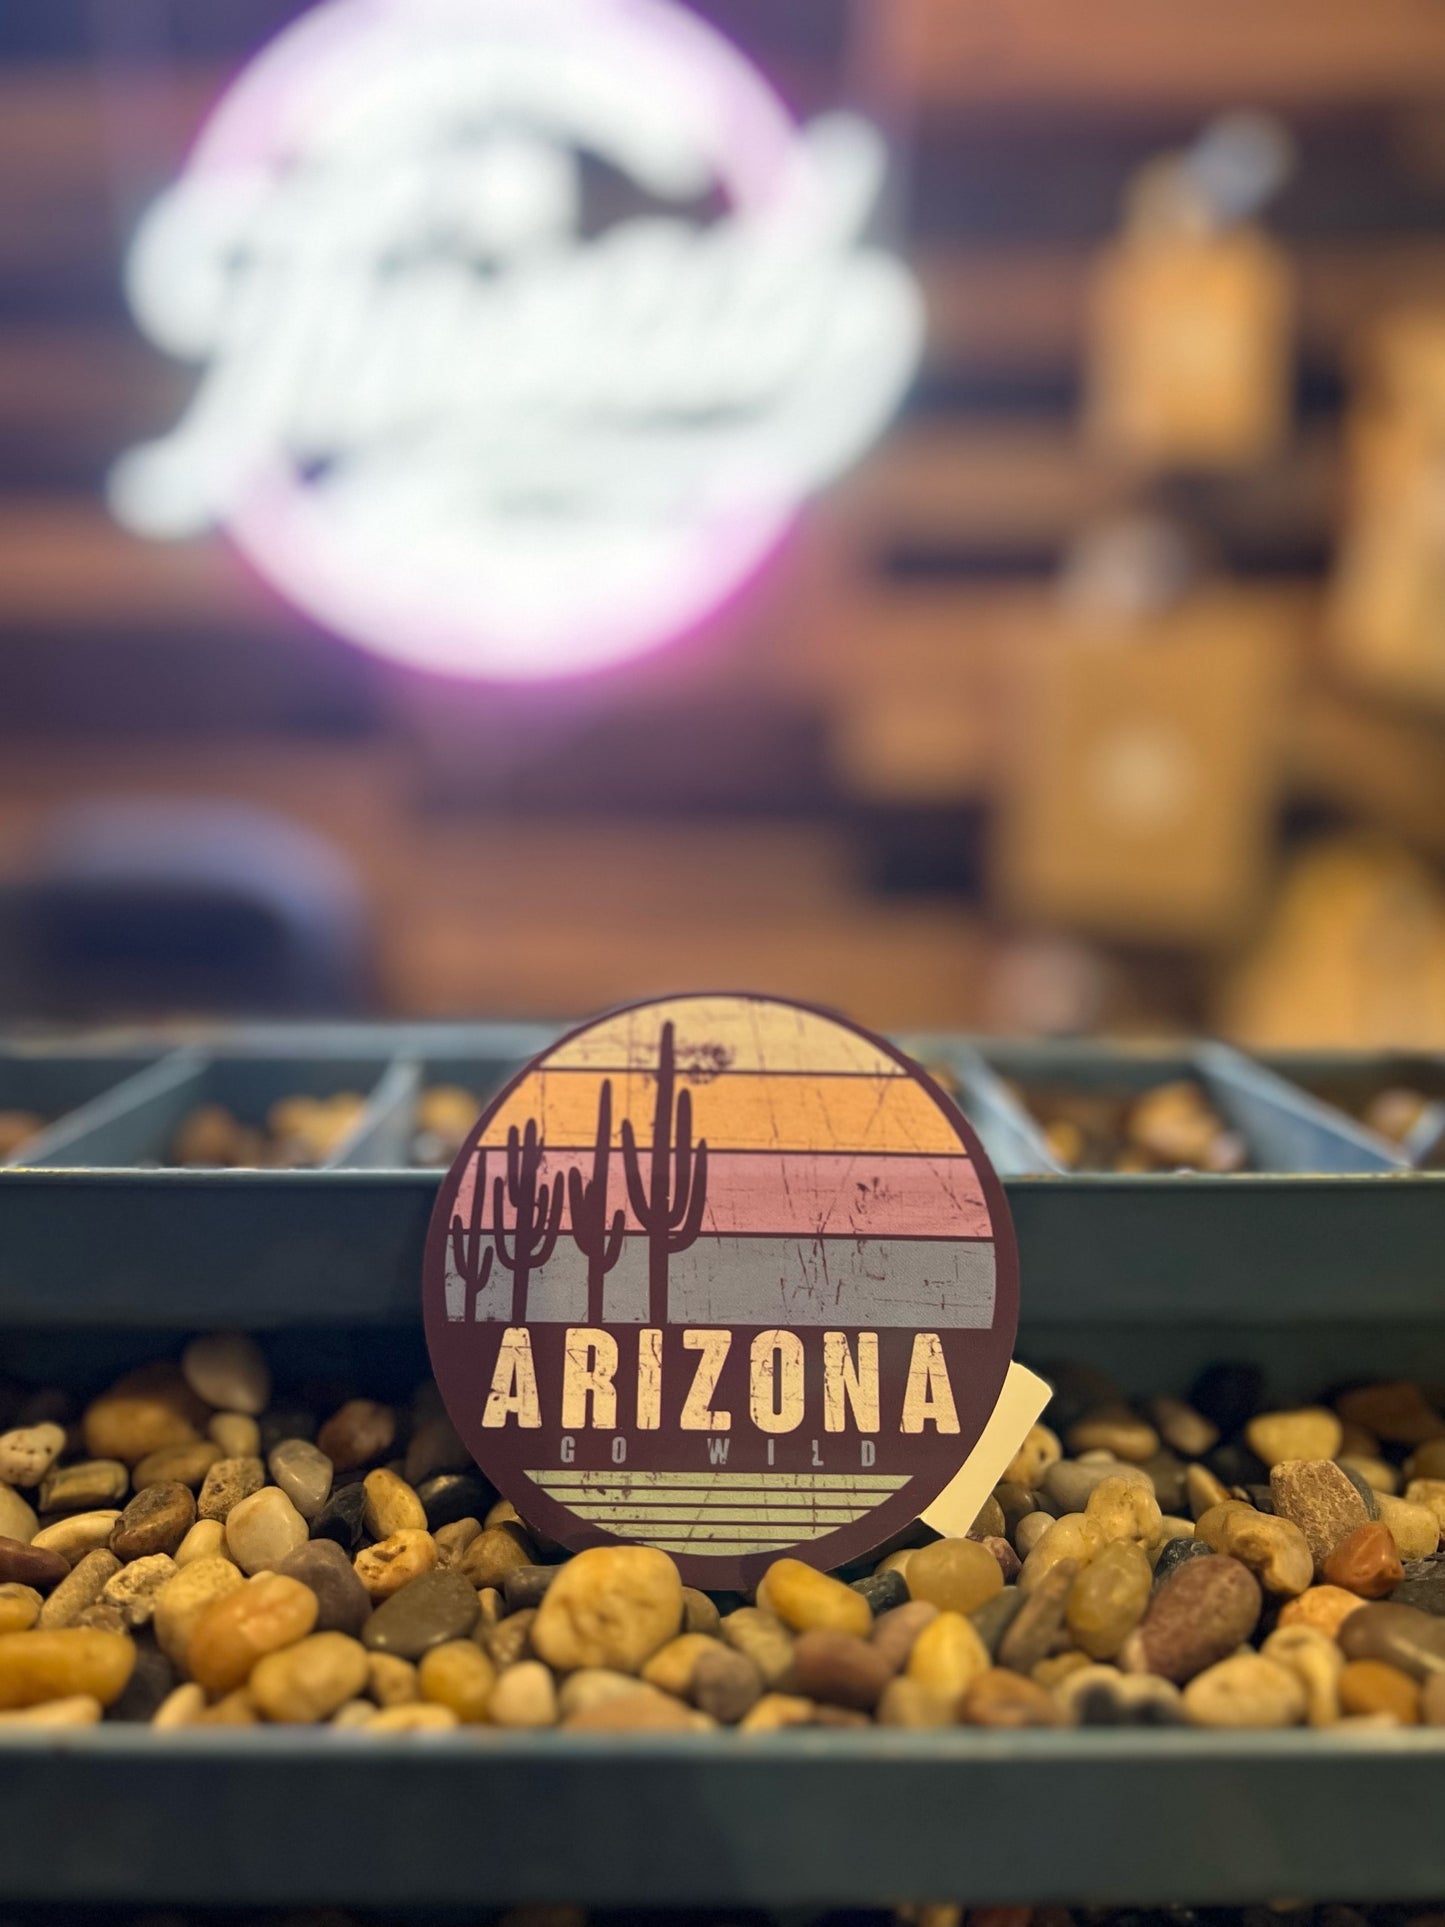 Arizona Stickers